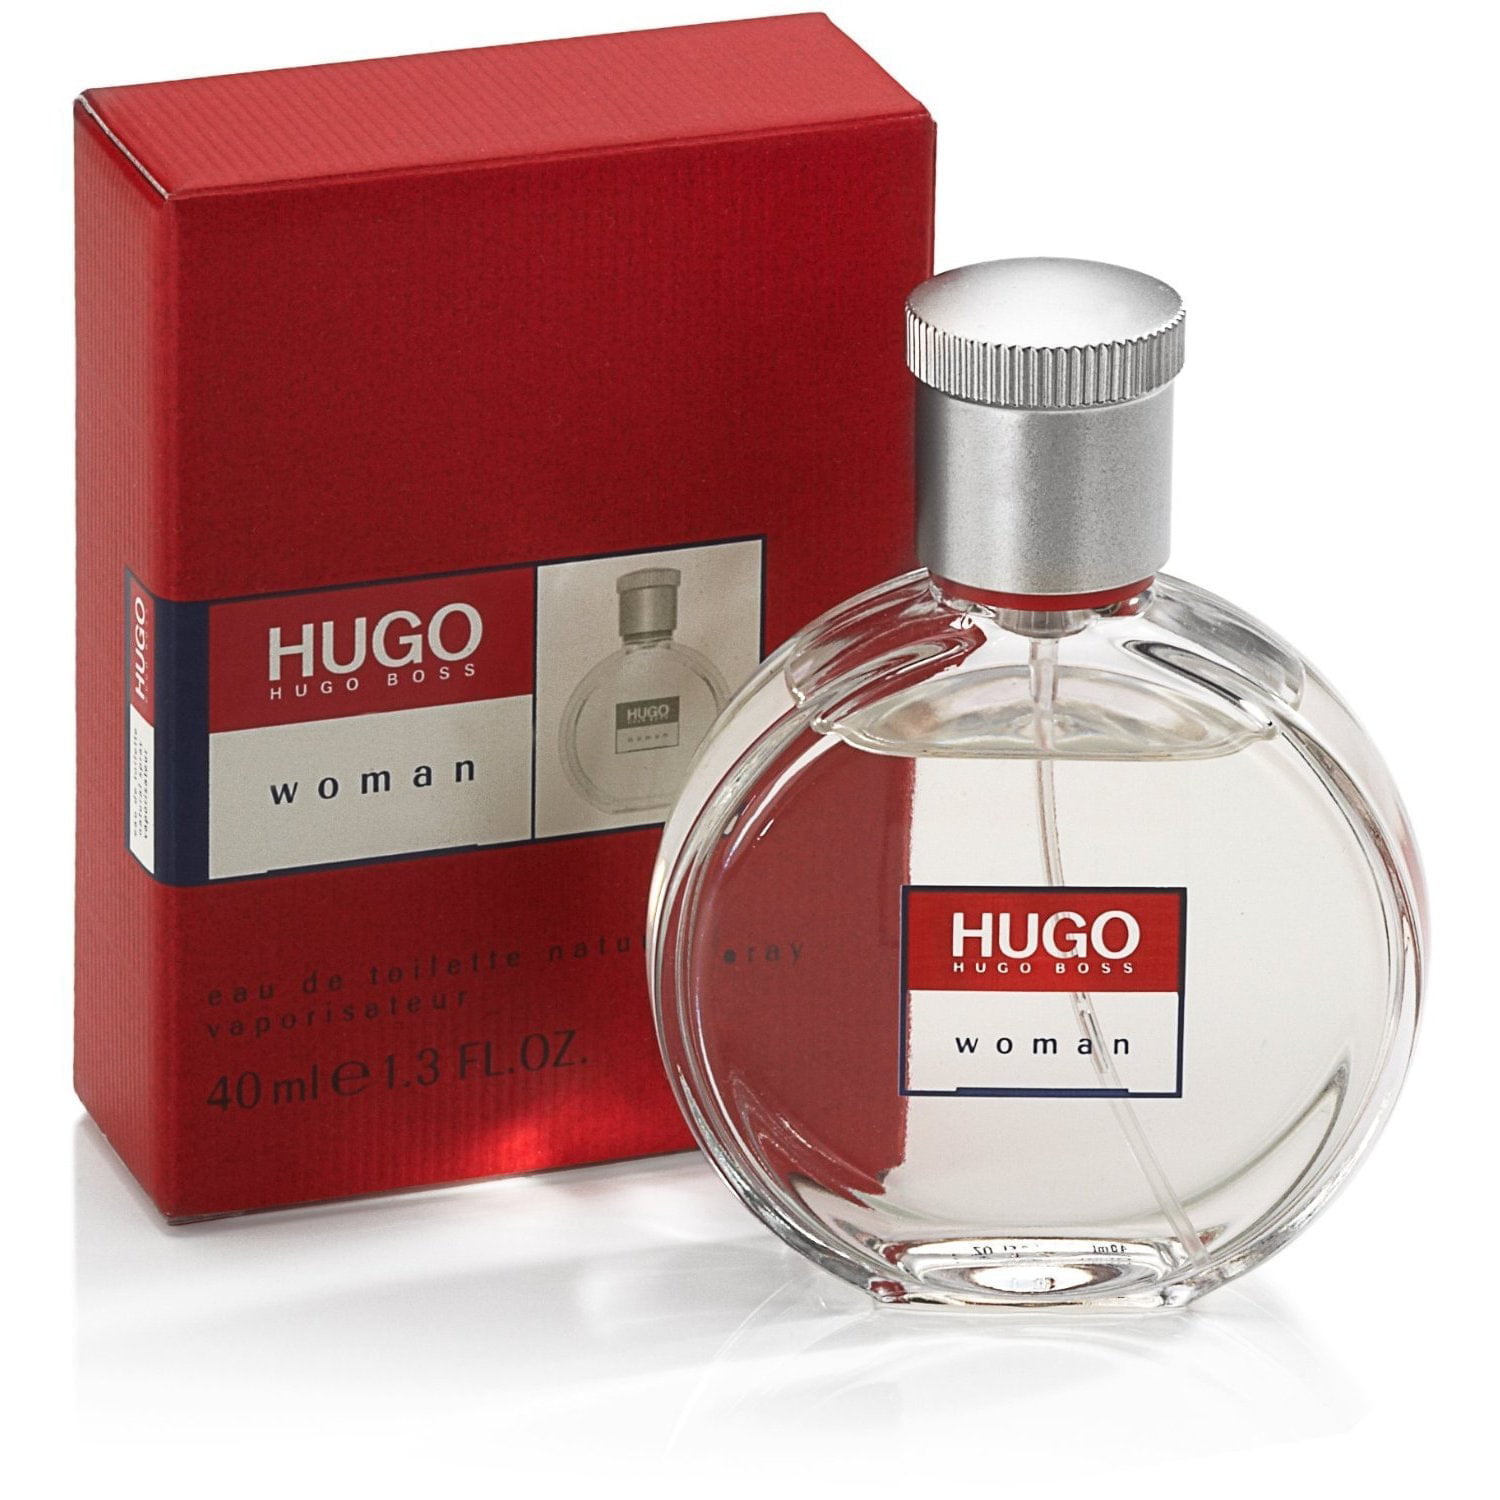 Хуго босс сайт. Духи Хьюго босс Вумен. Духи Boss Hugo Boss woman. Hugo Boss woman духи Red. Hugo Boss woman Eau de Toilette.